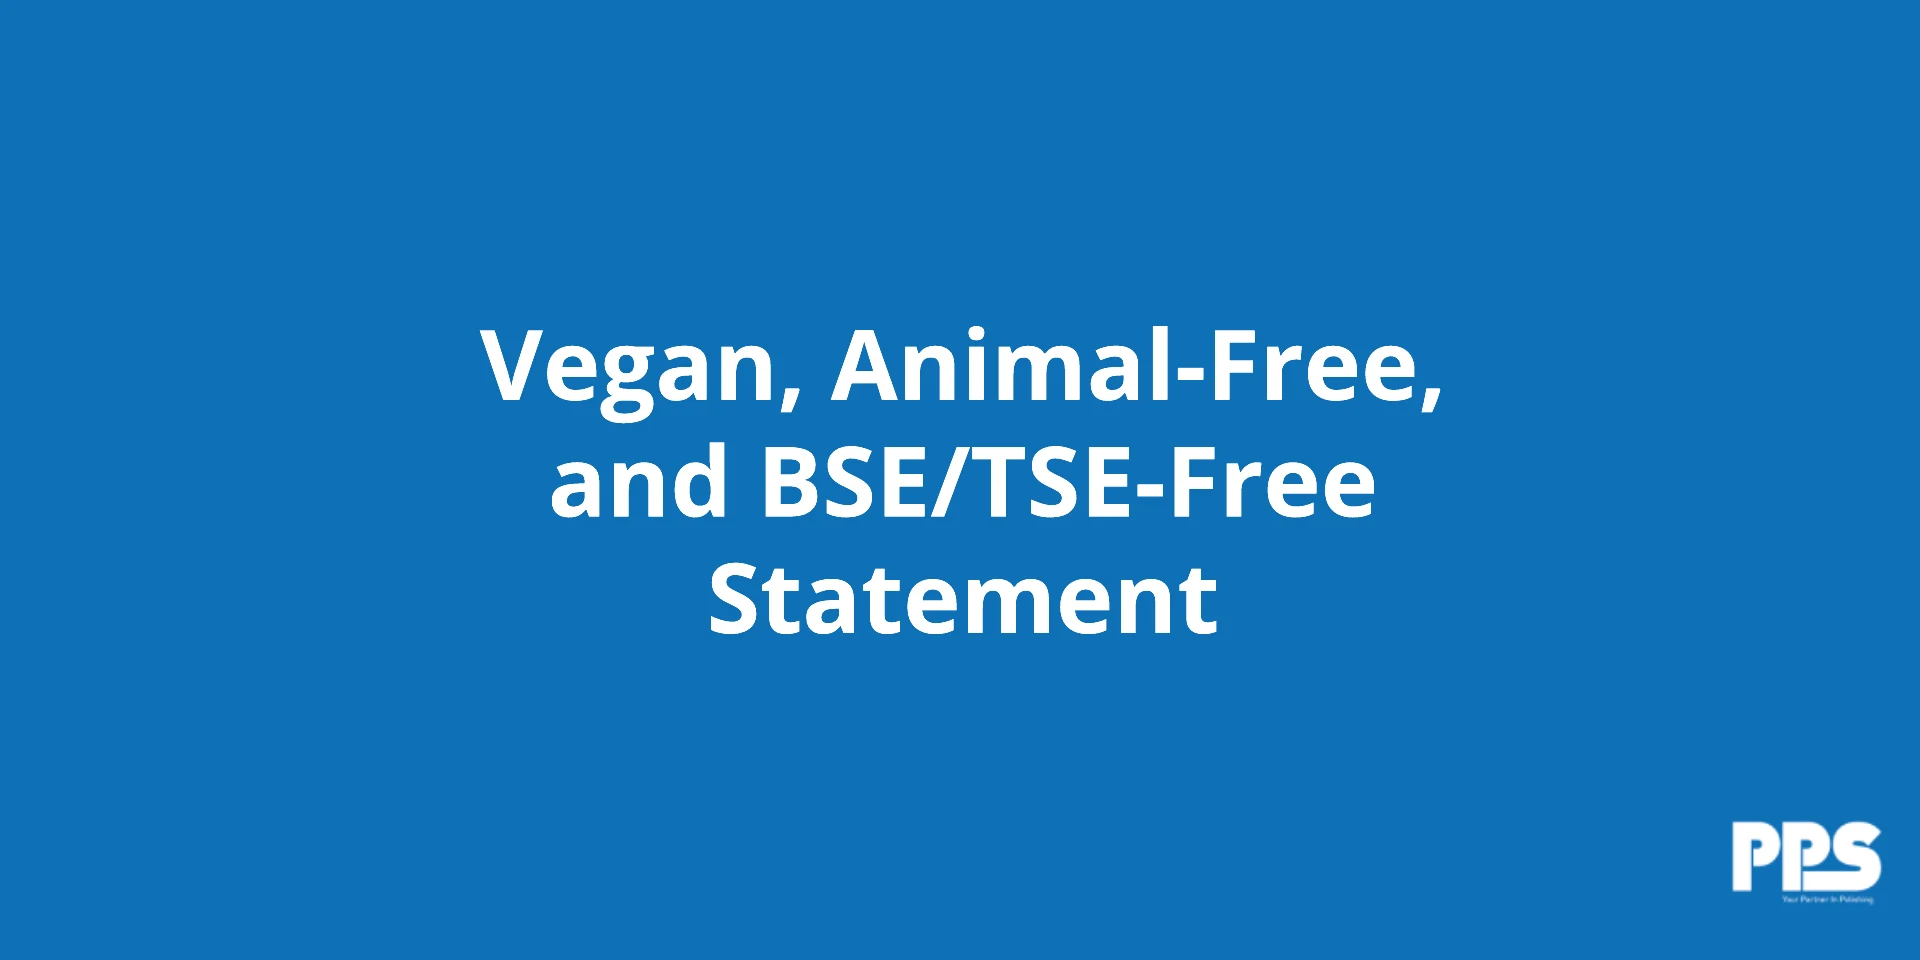 Vegan, Animal-Free, and BSE/TSE-Free Statement